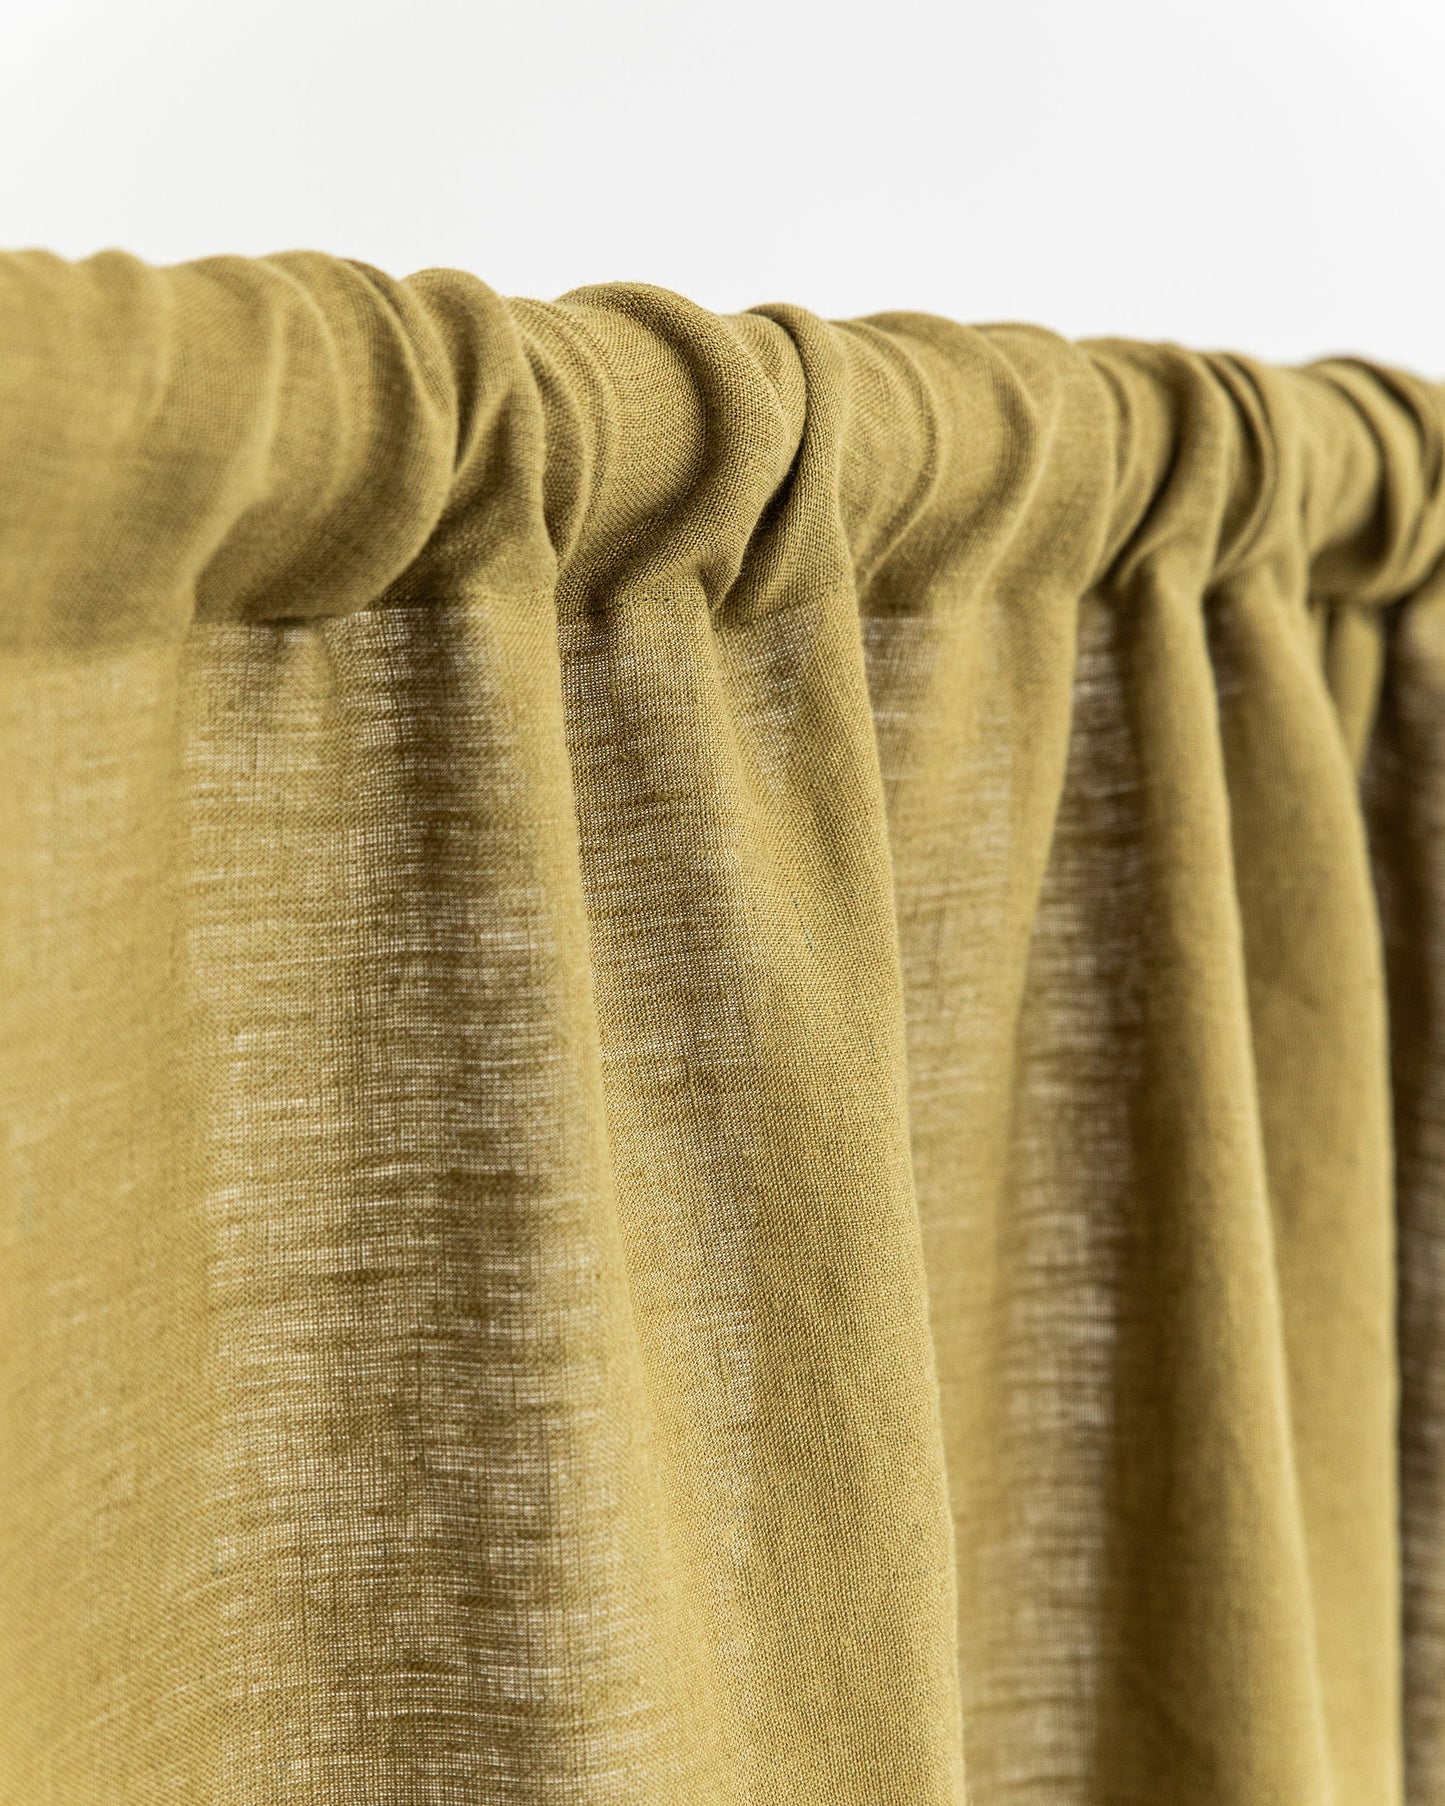 Rod pocket linen curtain panel (1 pcs) in Olive green - MagicLinen